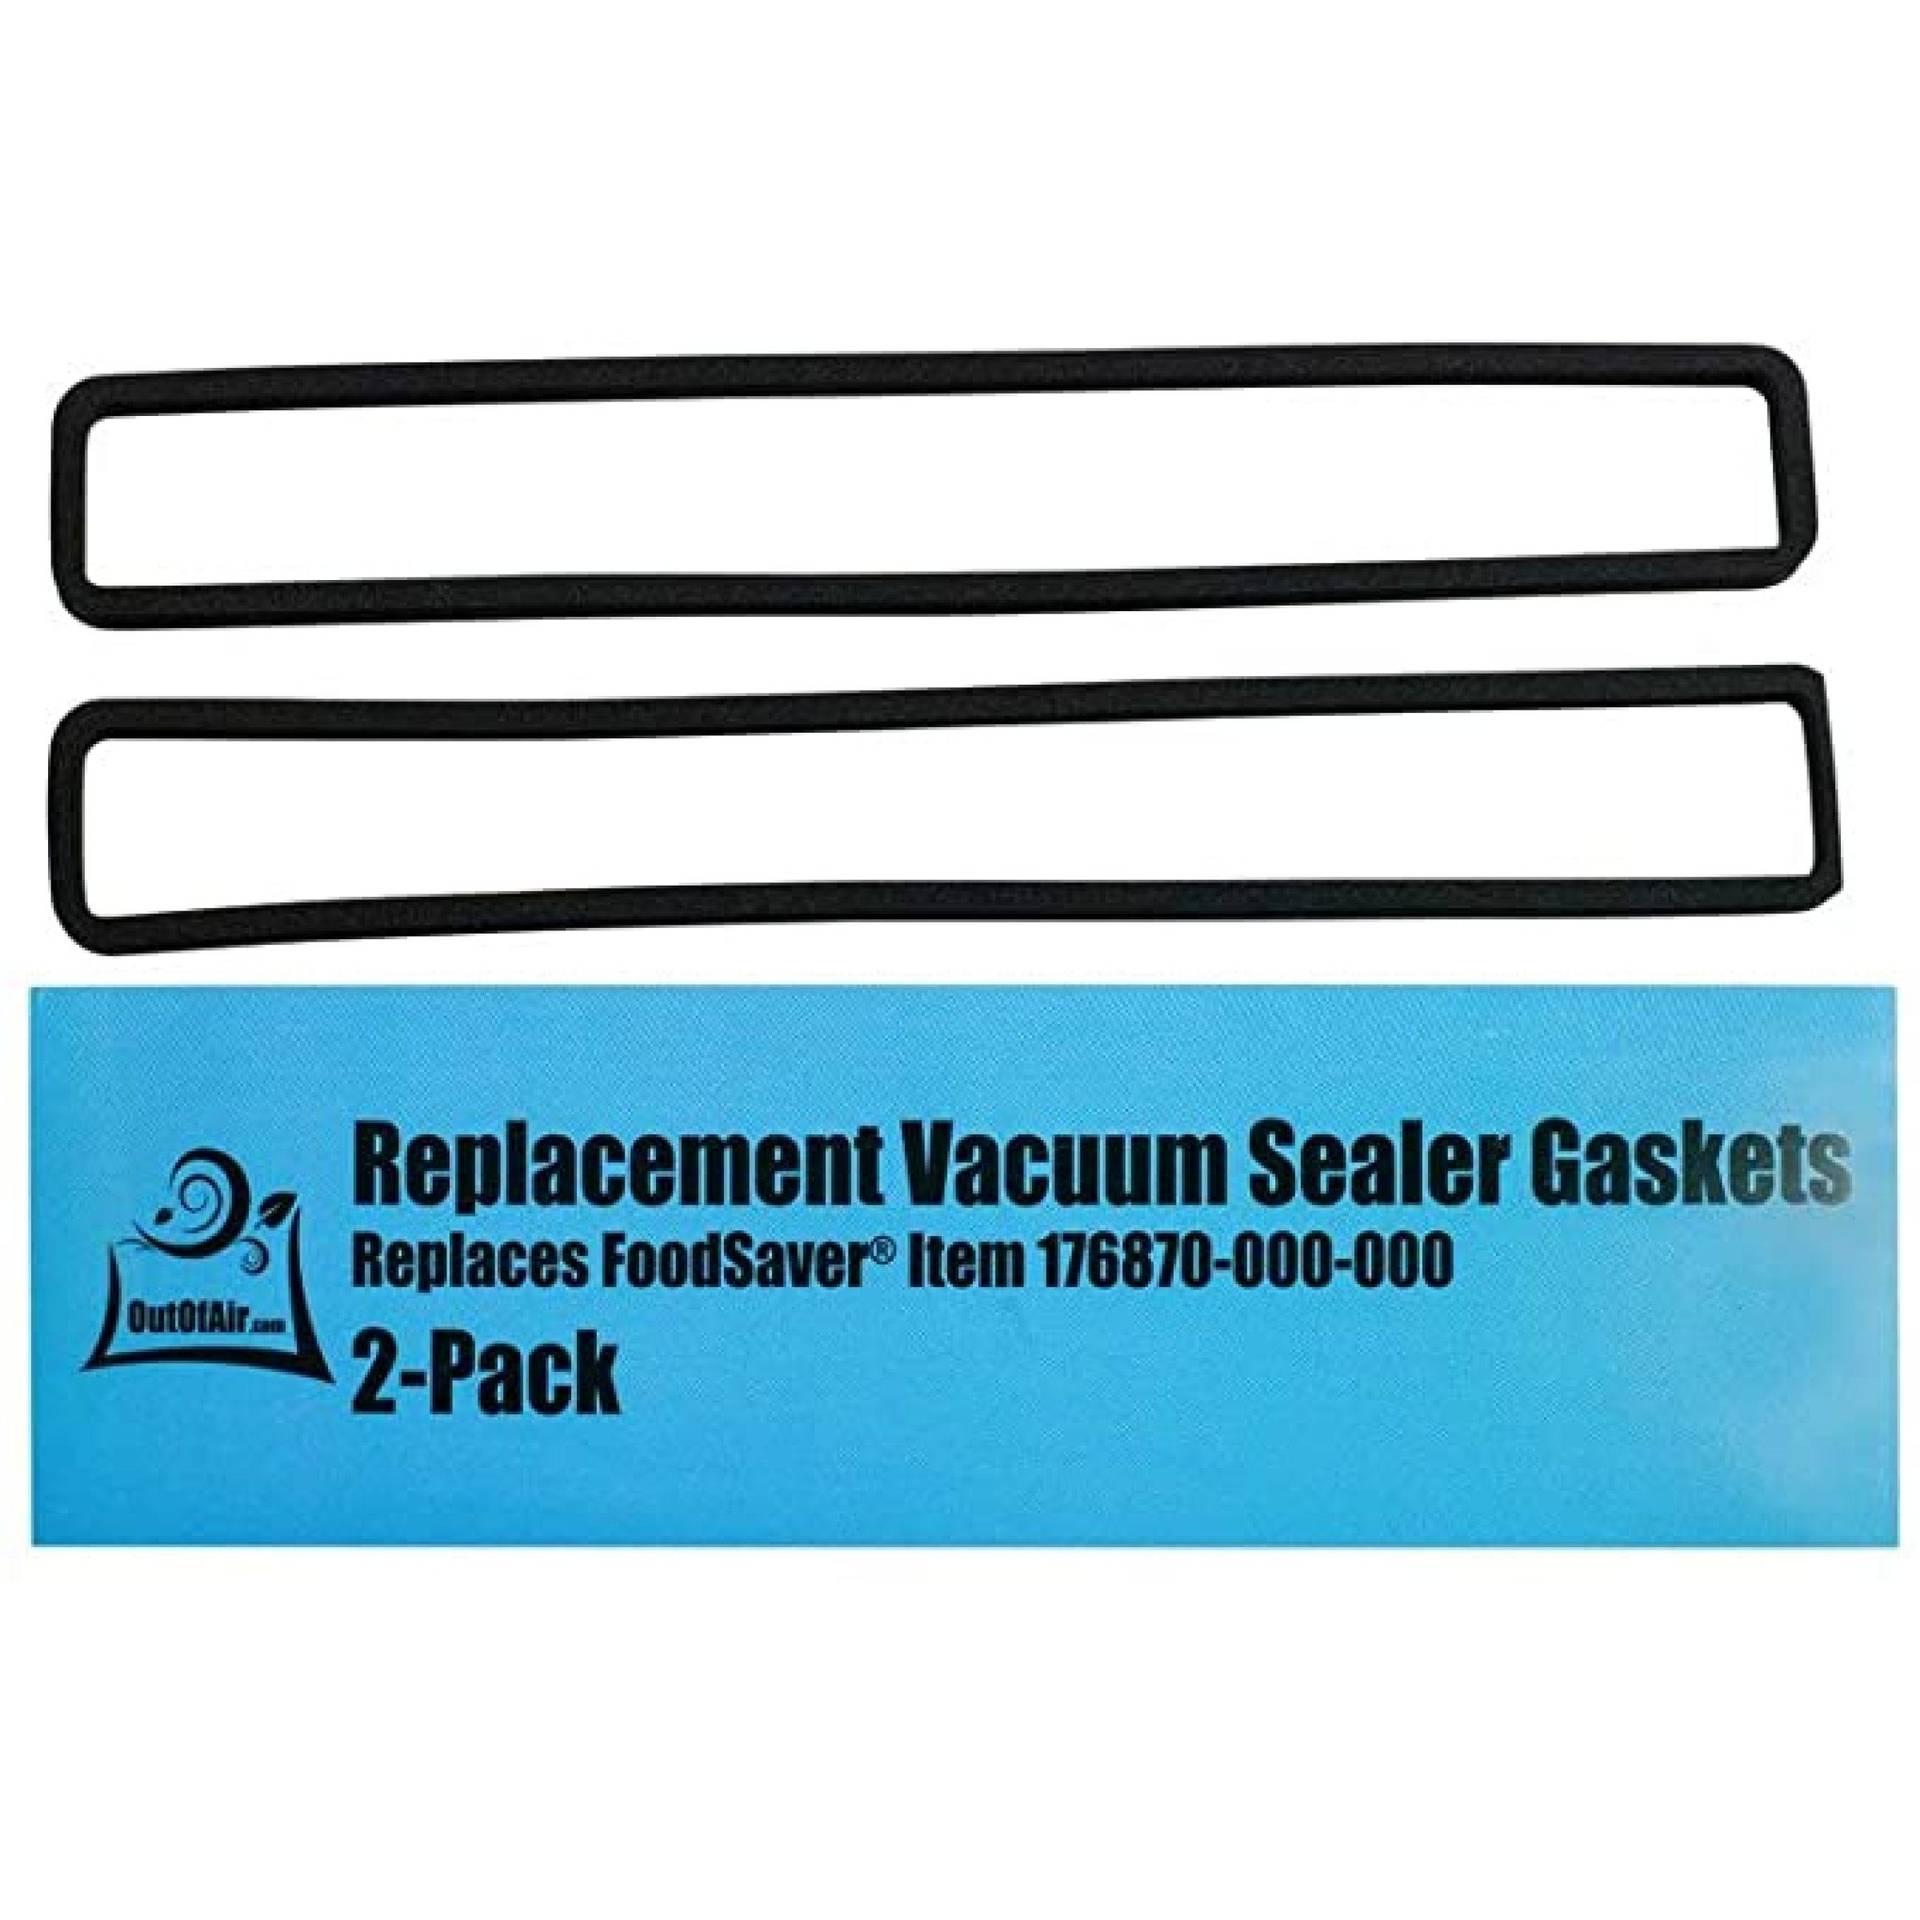 OutOfAir replacement vacuum sealer gaskets | replaces item 176870-000-000 - 2 packs